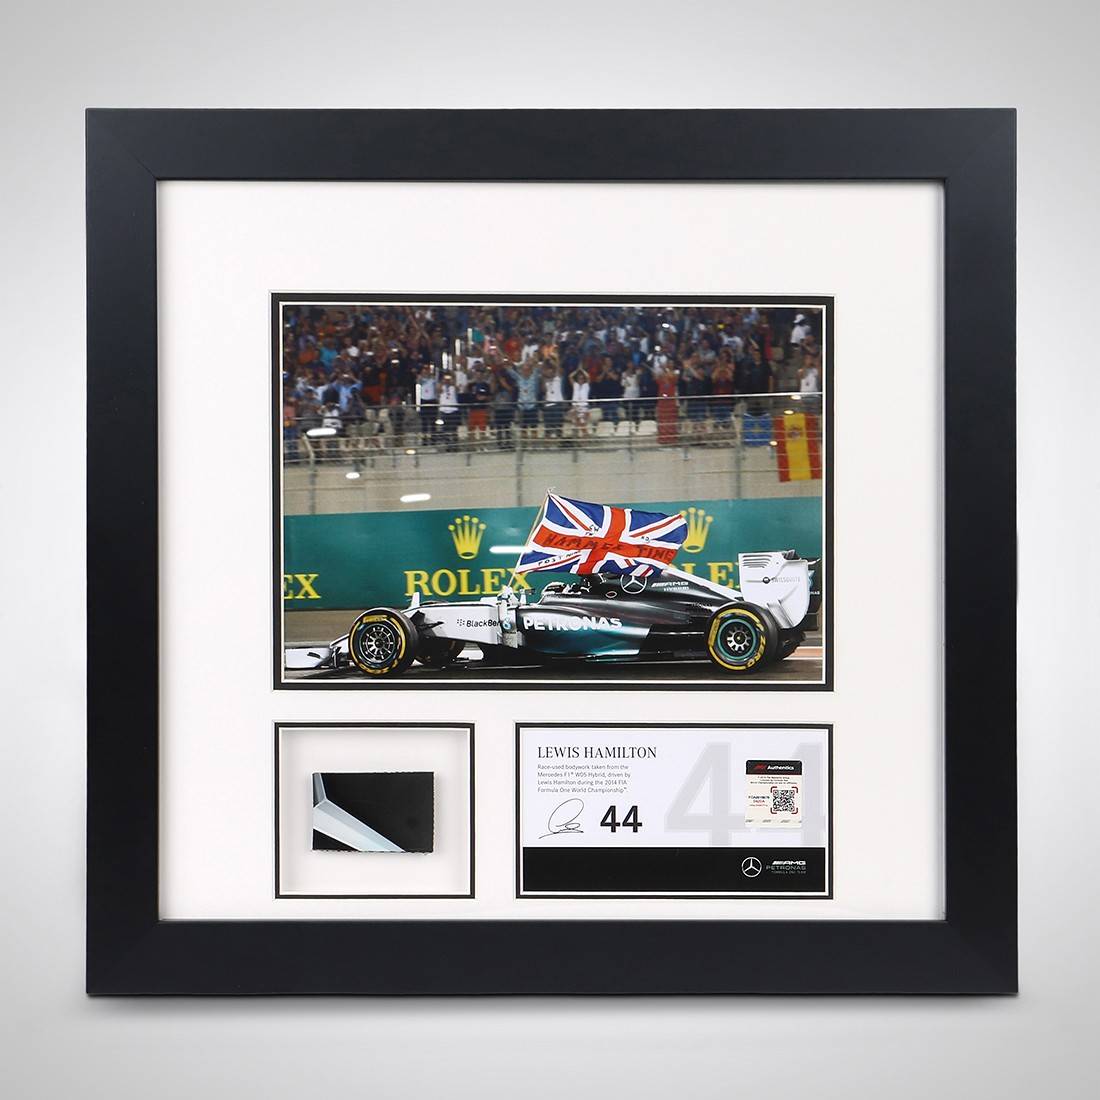 Lewis Hamilton 2014 'British Flag' Bodywork & Photo - Abu Dhabi GP